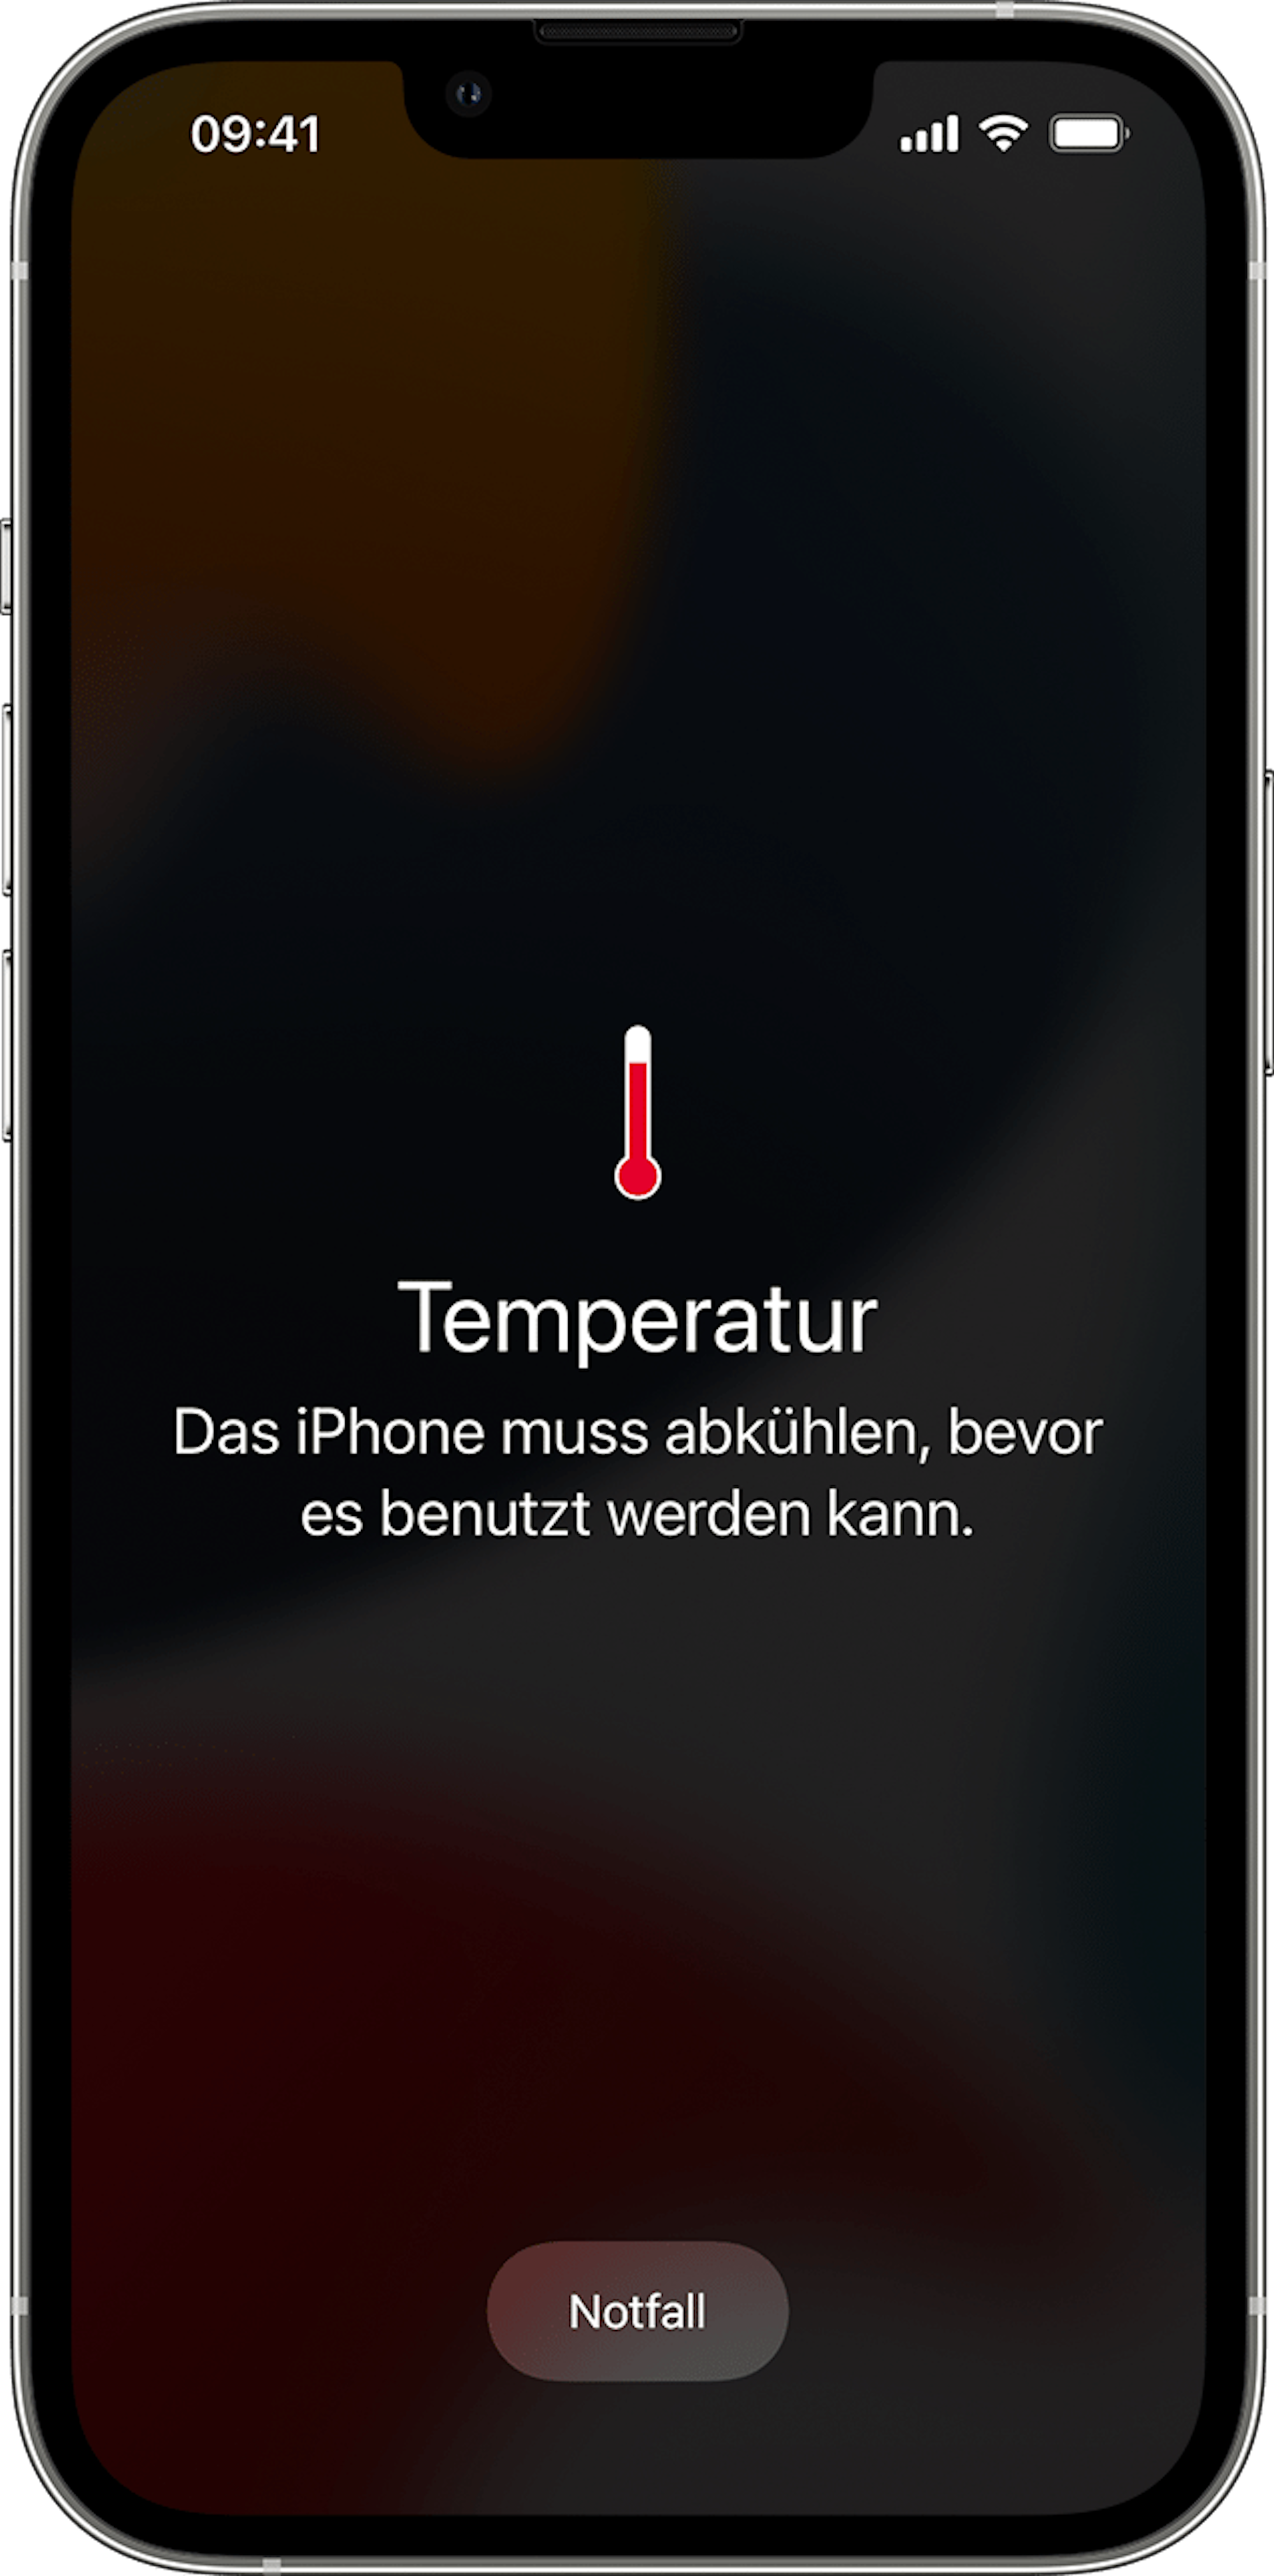 iPhone-Display bei überhitztem Smartphone mit Temperatur-Hinweis